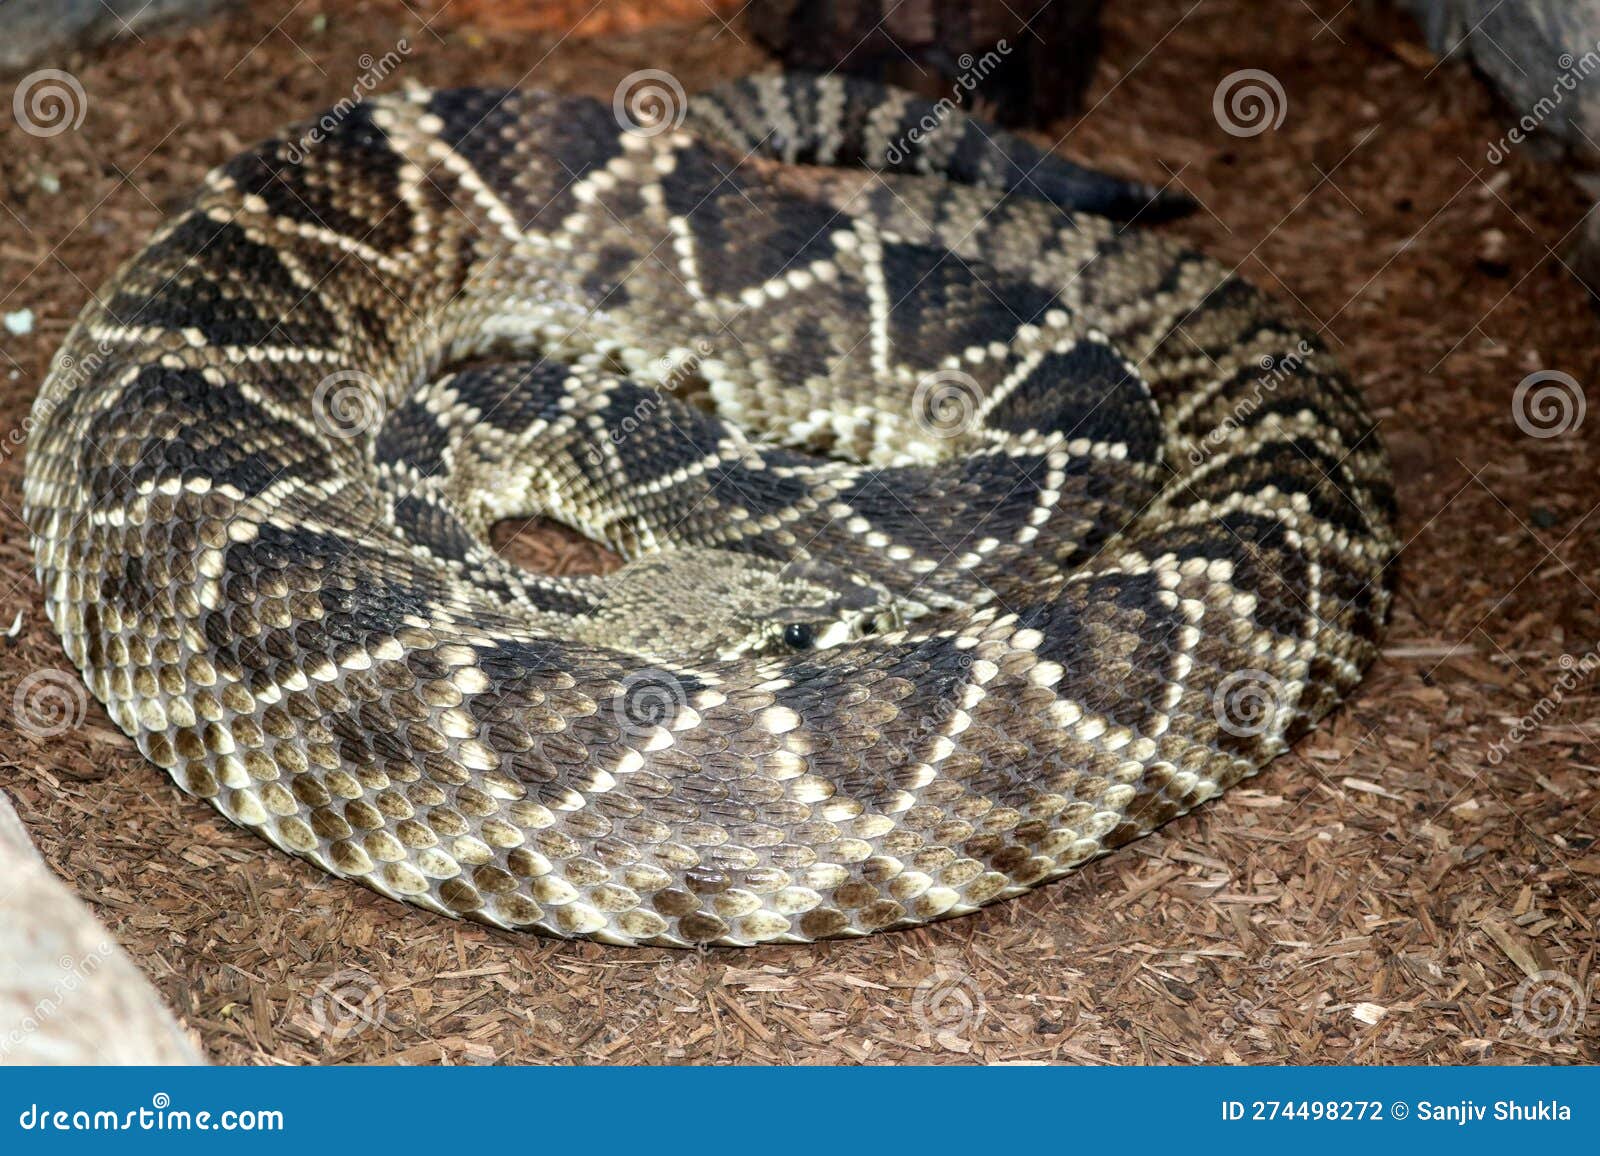 eastern diamondback rattlesnake (crotalus adamanteus) in a zoo : (pix sanjiv shukla)